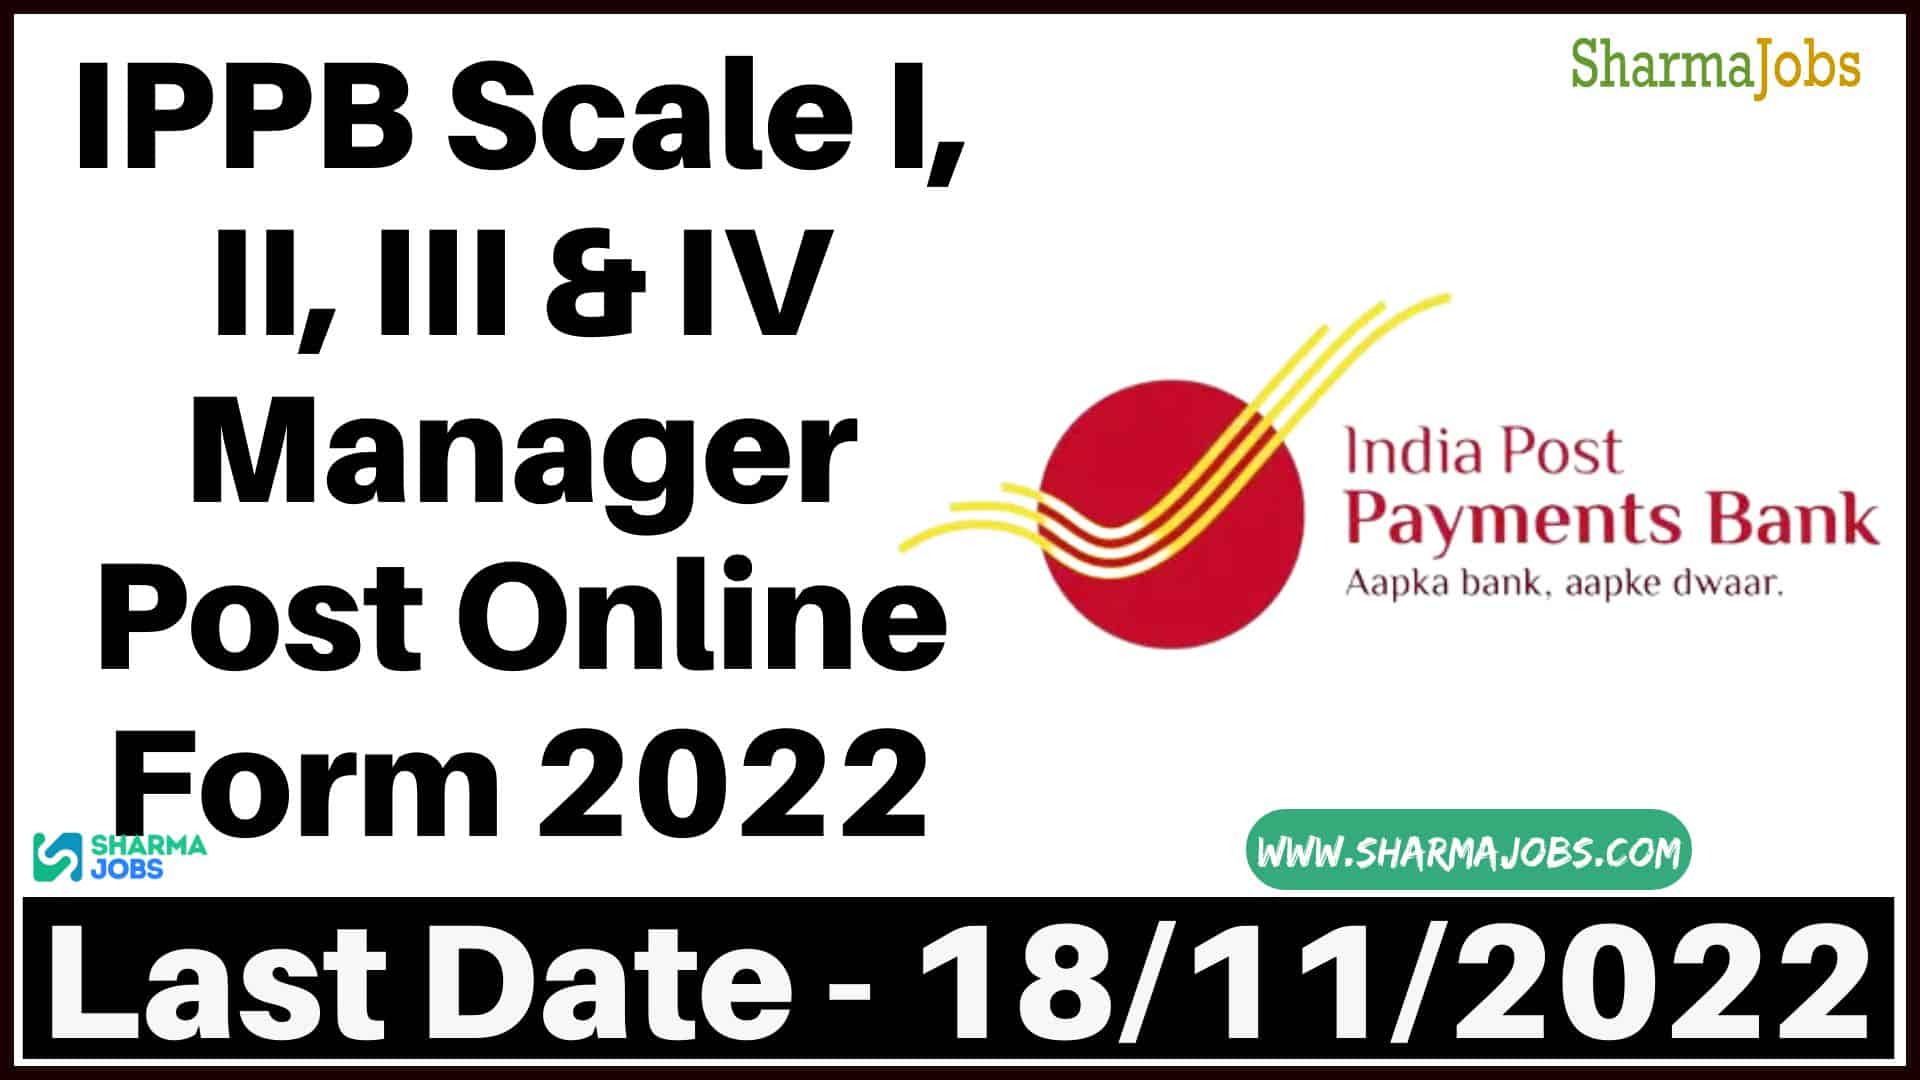 IPPB Scale I, II, III & IV Manager Post Online Form 2022